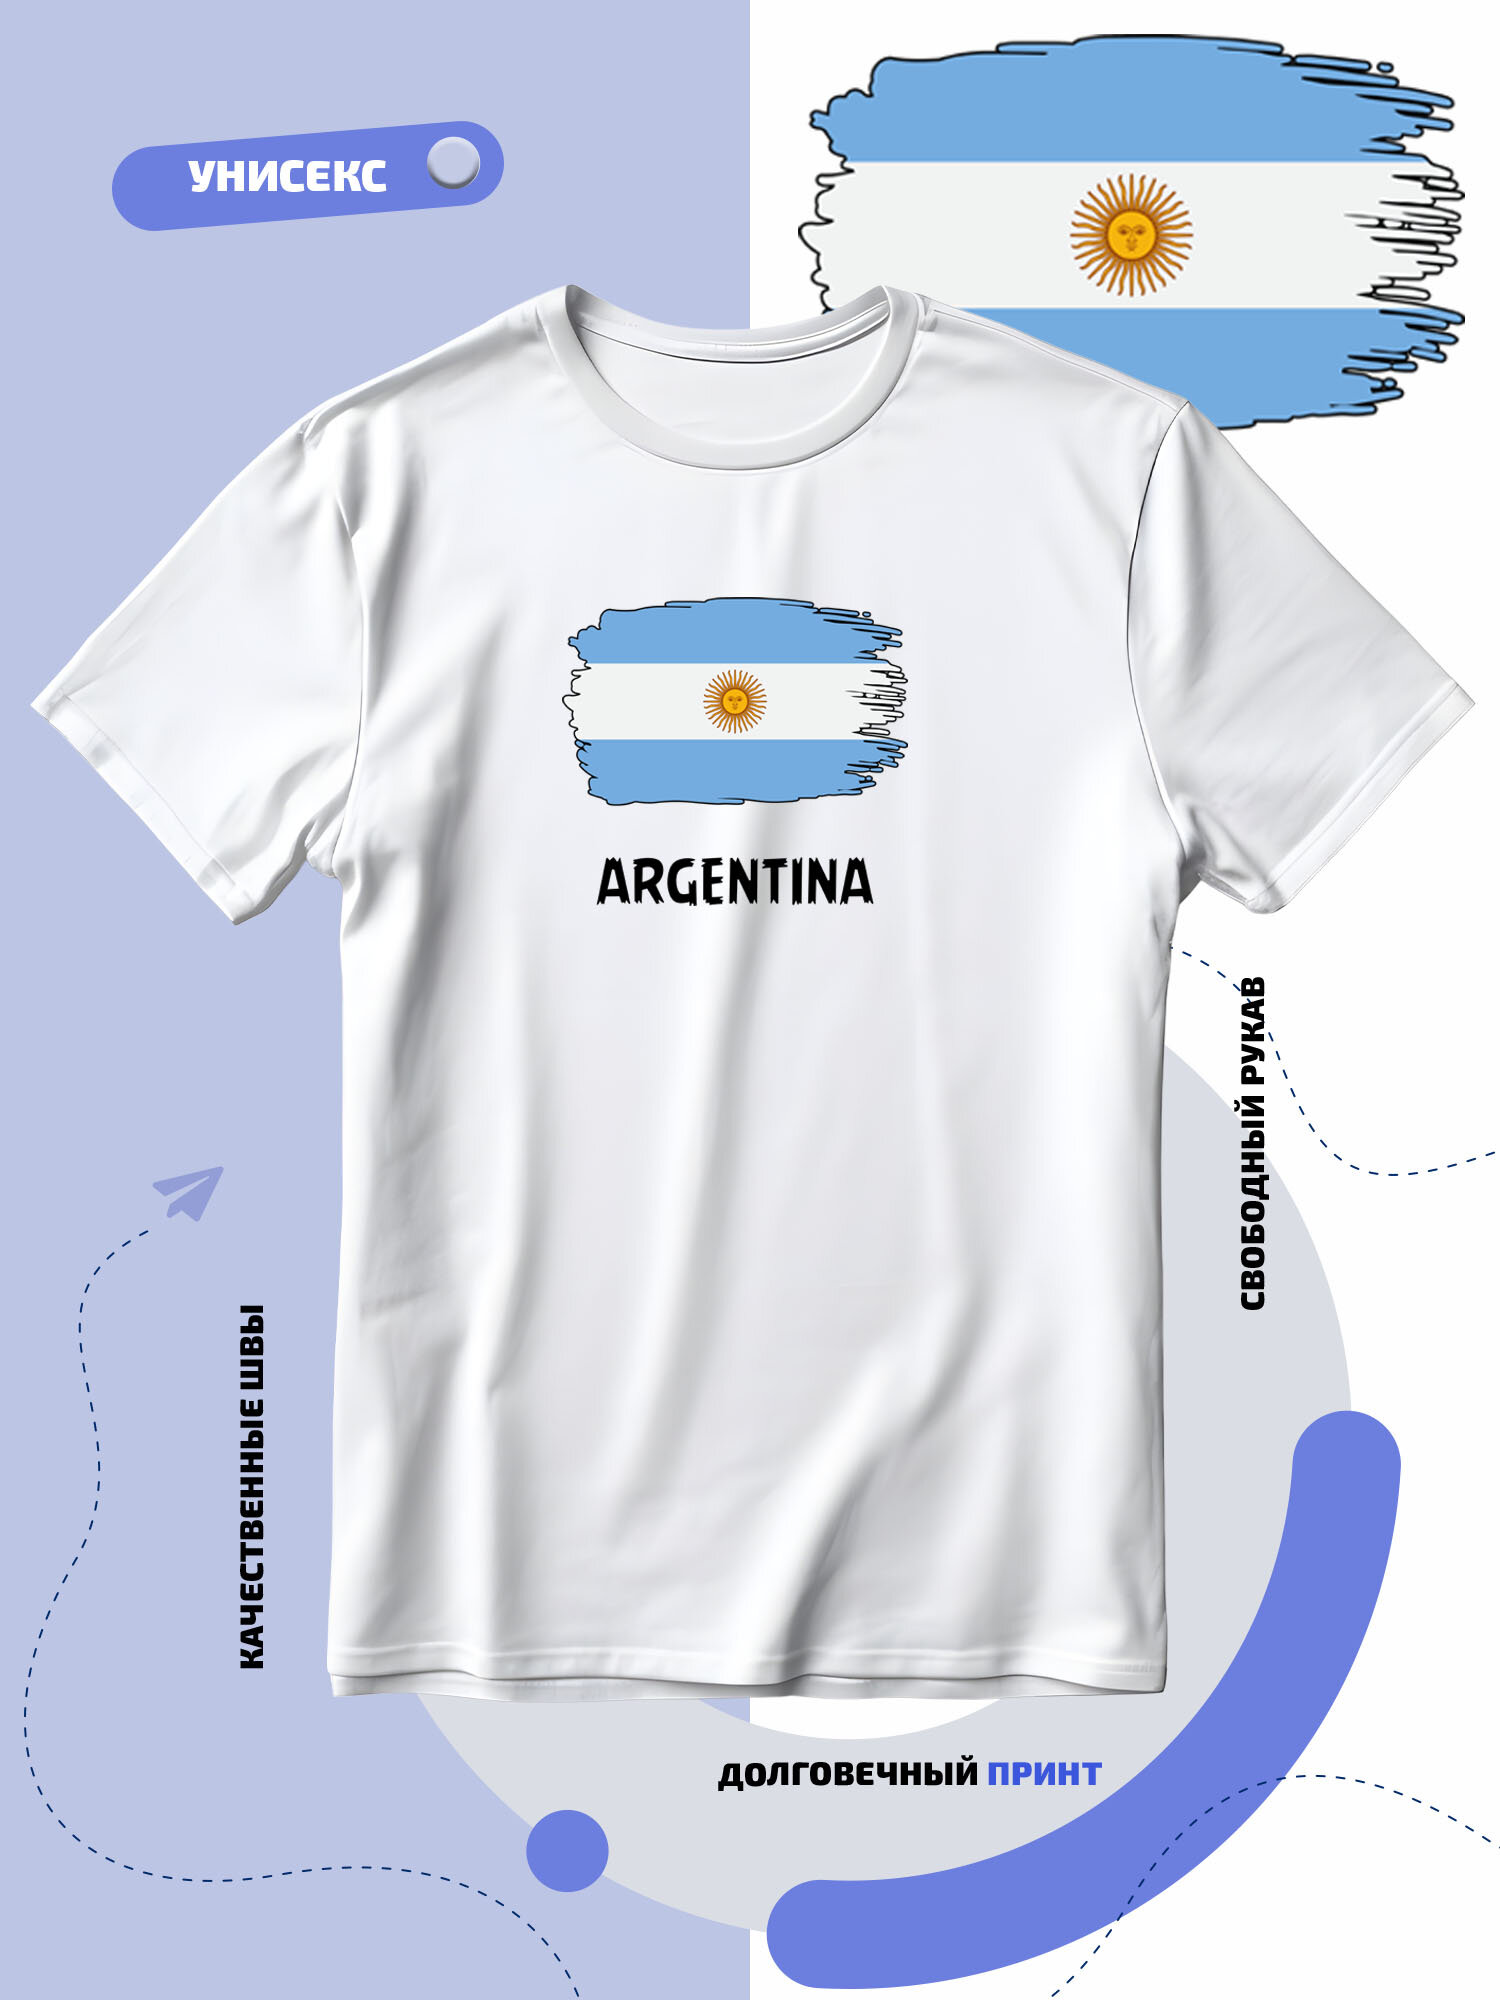 Футболка SMAIL-P с флагом Аргентины-Argentina